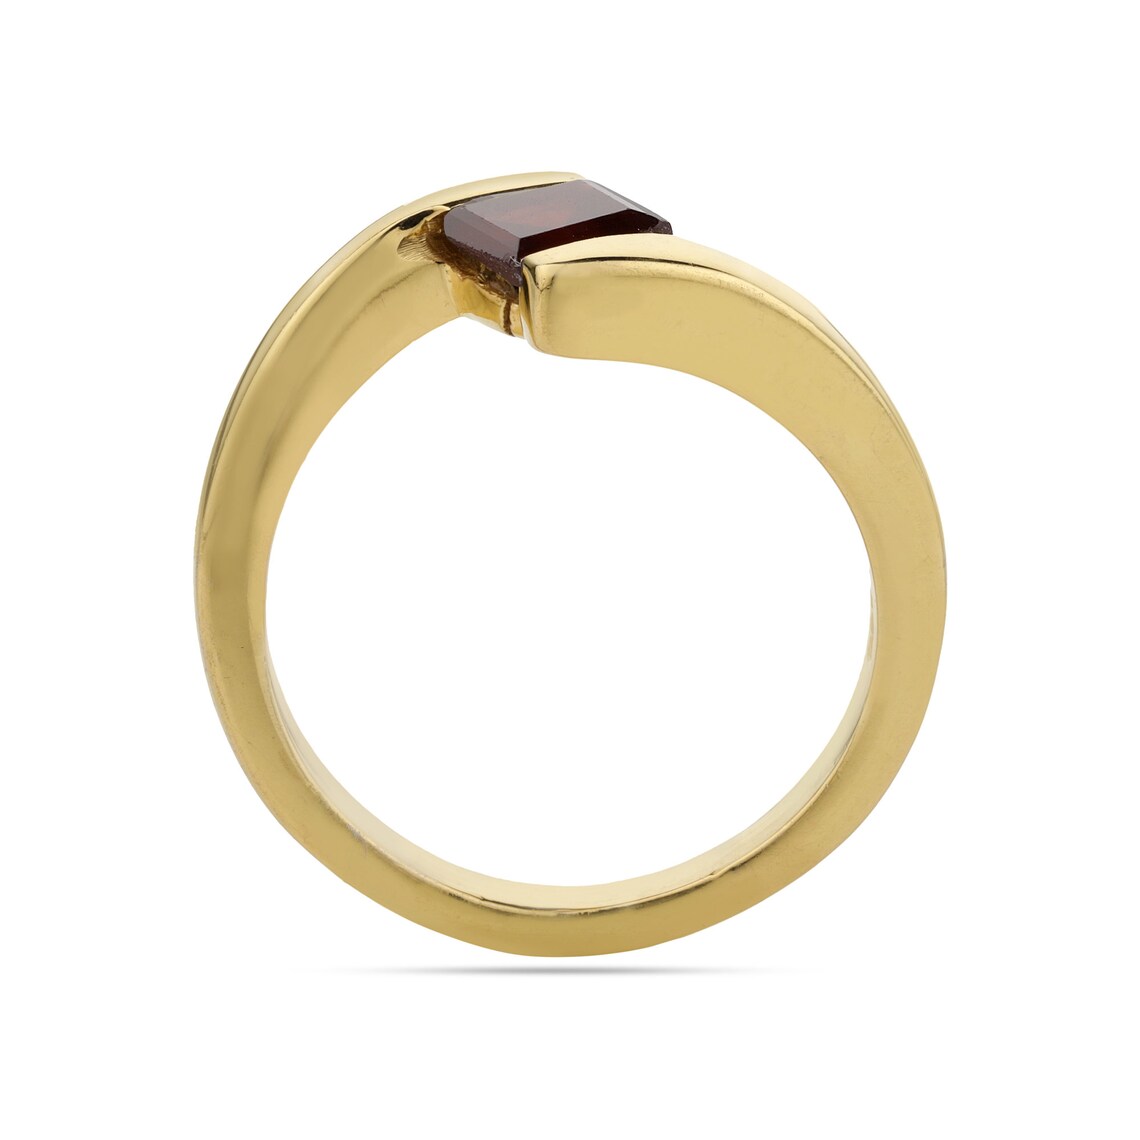 Natural Garnet Gold Ring, Garnet Square Shape Ring, Garnet Designer Stacking Ring, Minimalist garnet solitaire ring